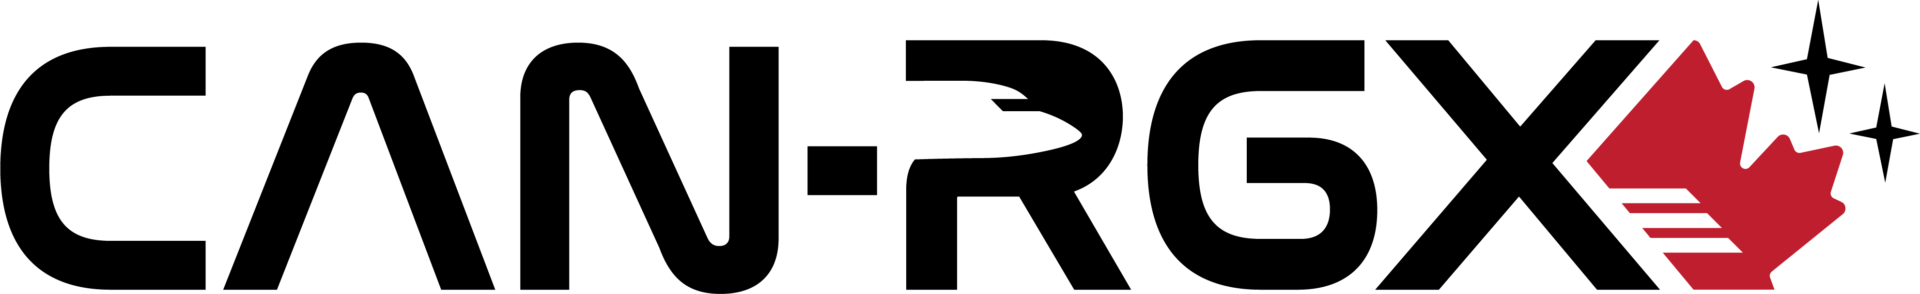 CAN-RGX logo